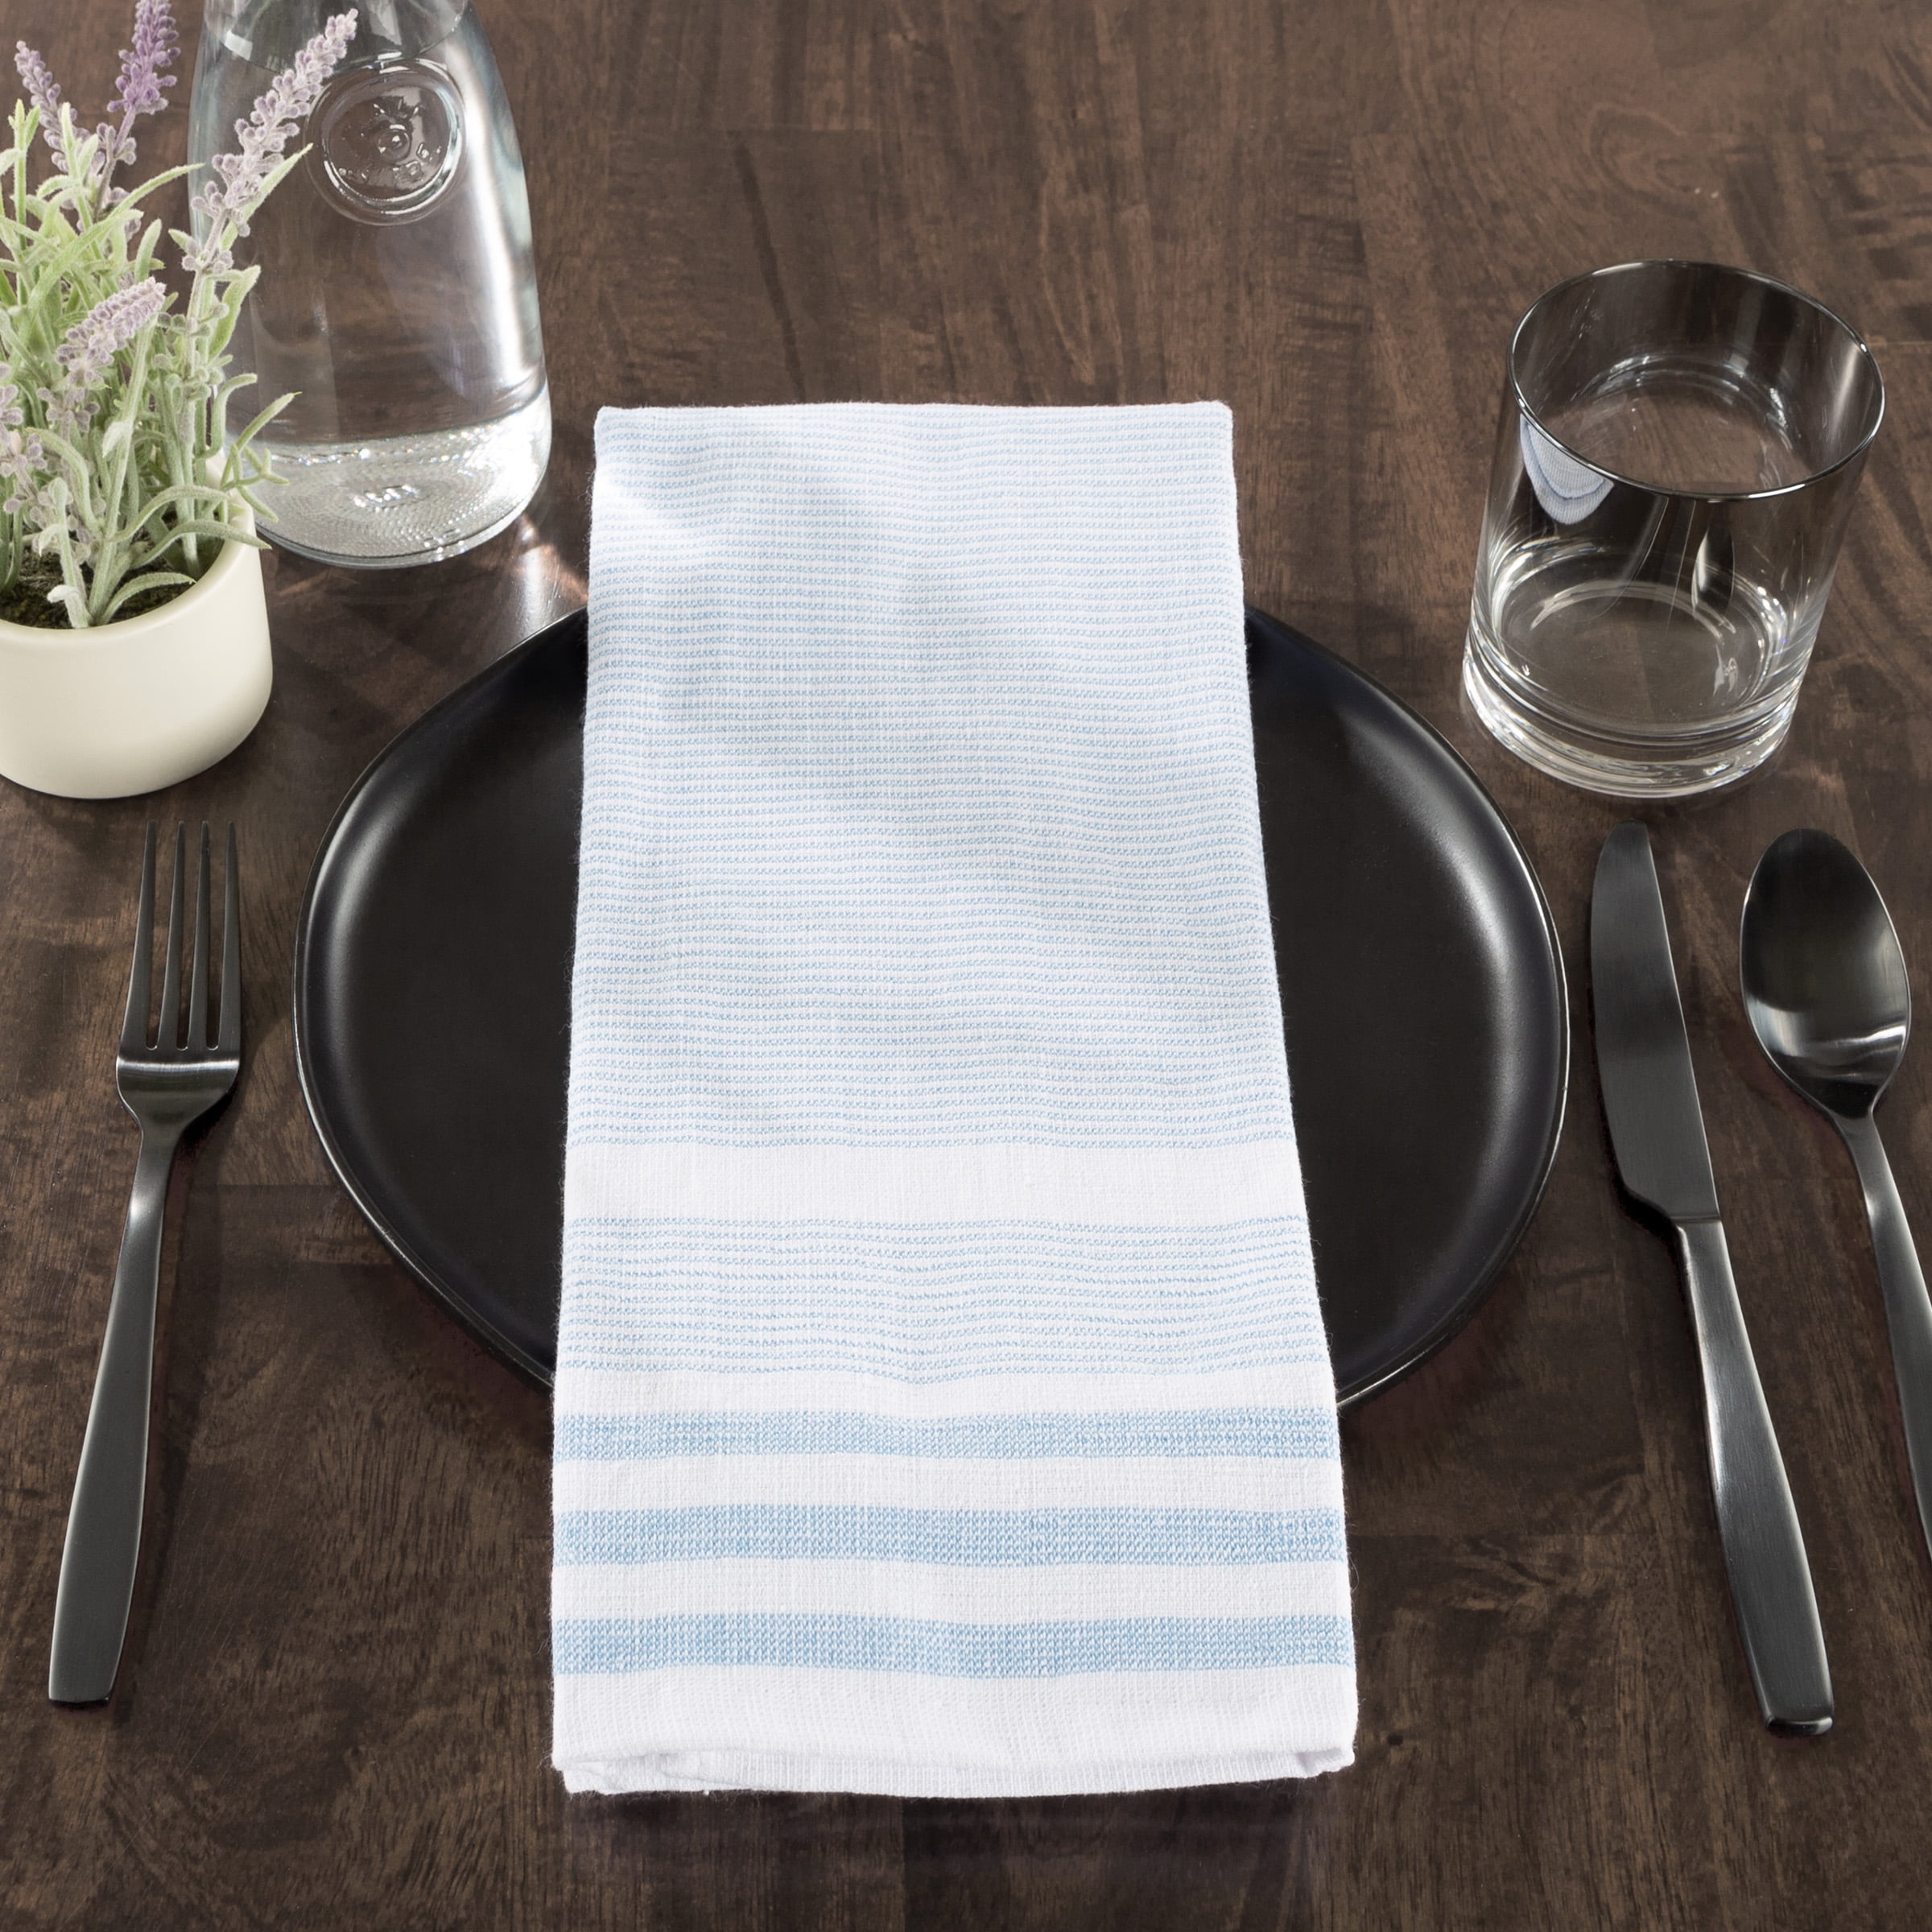 Somerset Home Cotton Chevron Terry 16-Piece Kitchen Towel Set